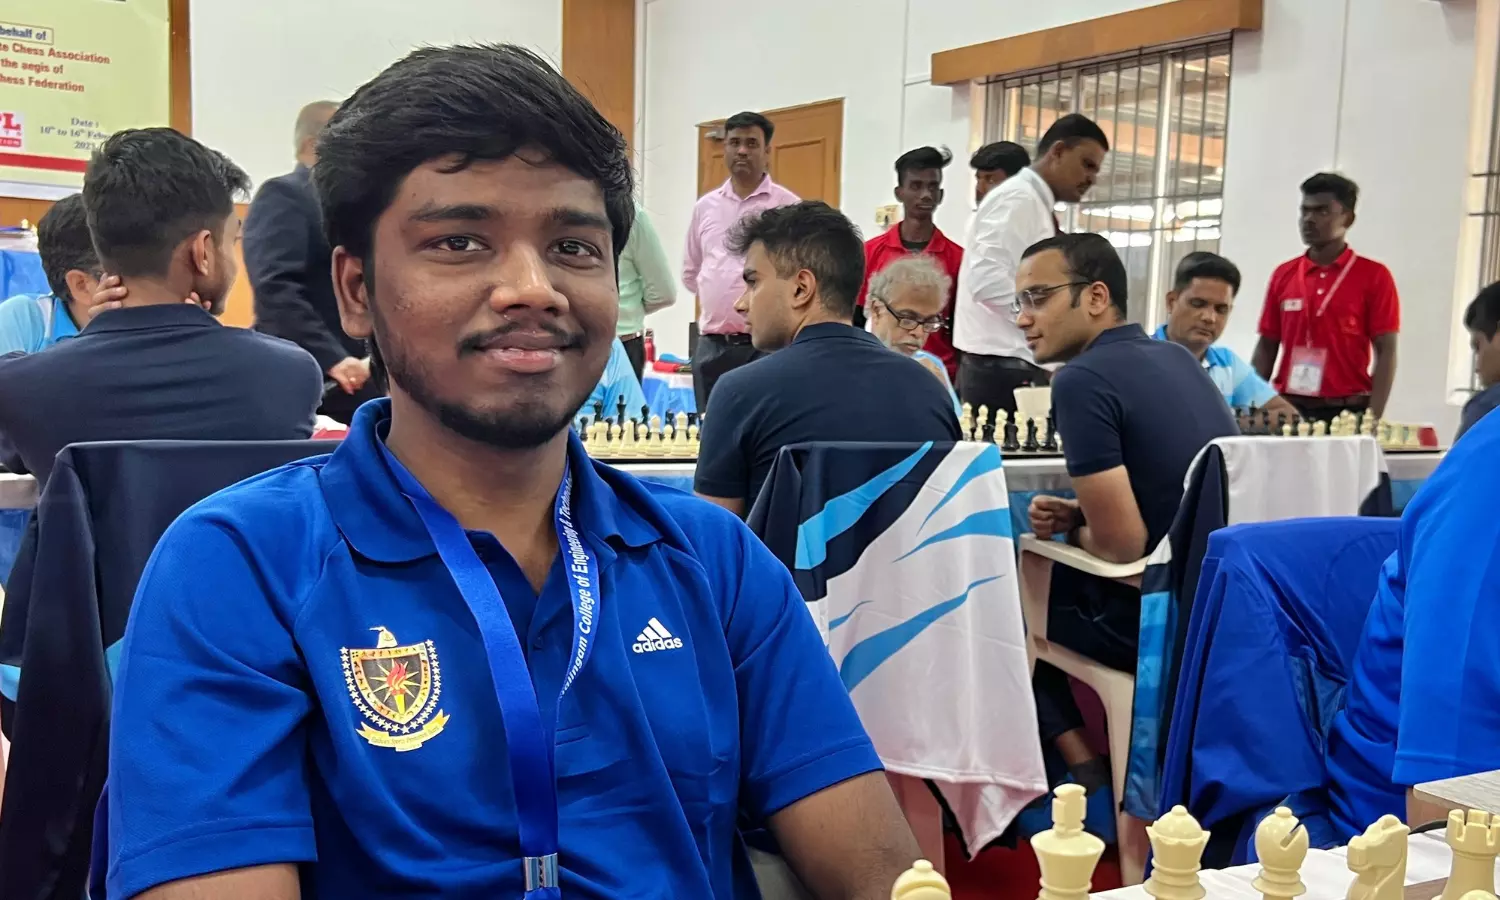 16-year-old Pranesh is India's 79th Grandmaster